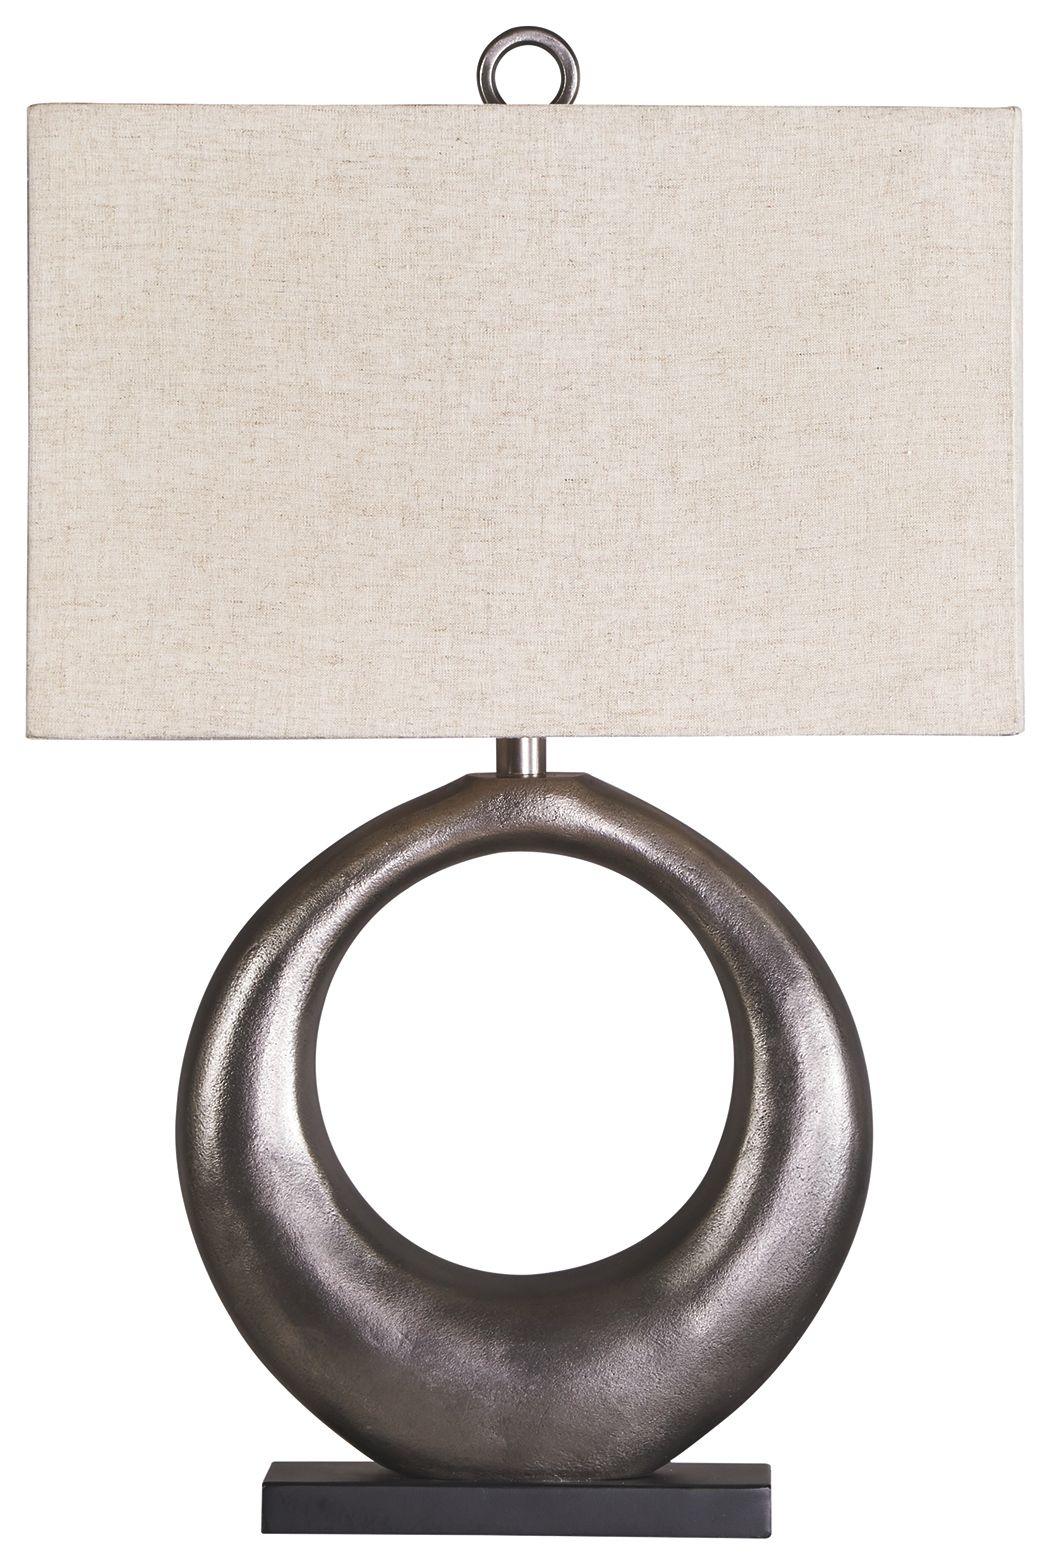 Ashley Furniture - Saria - Antique Silver Finish - Metal Table Lamp - 5th Avenue Furniture